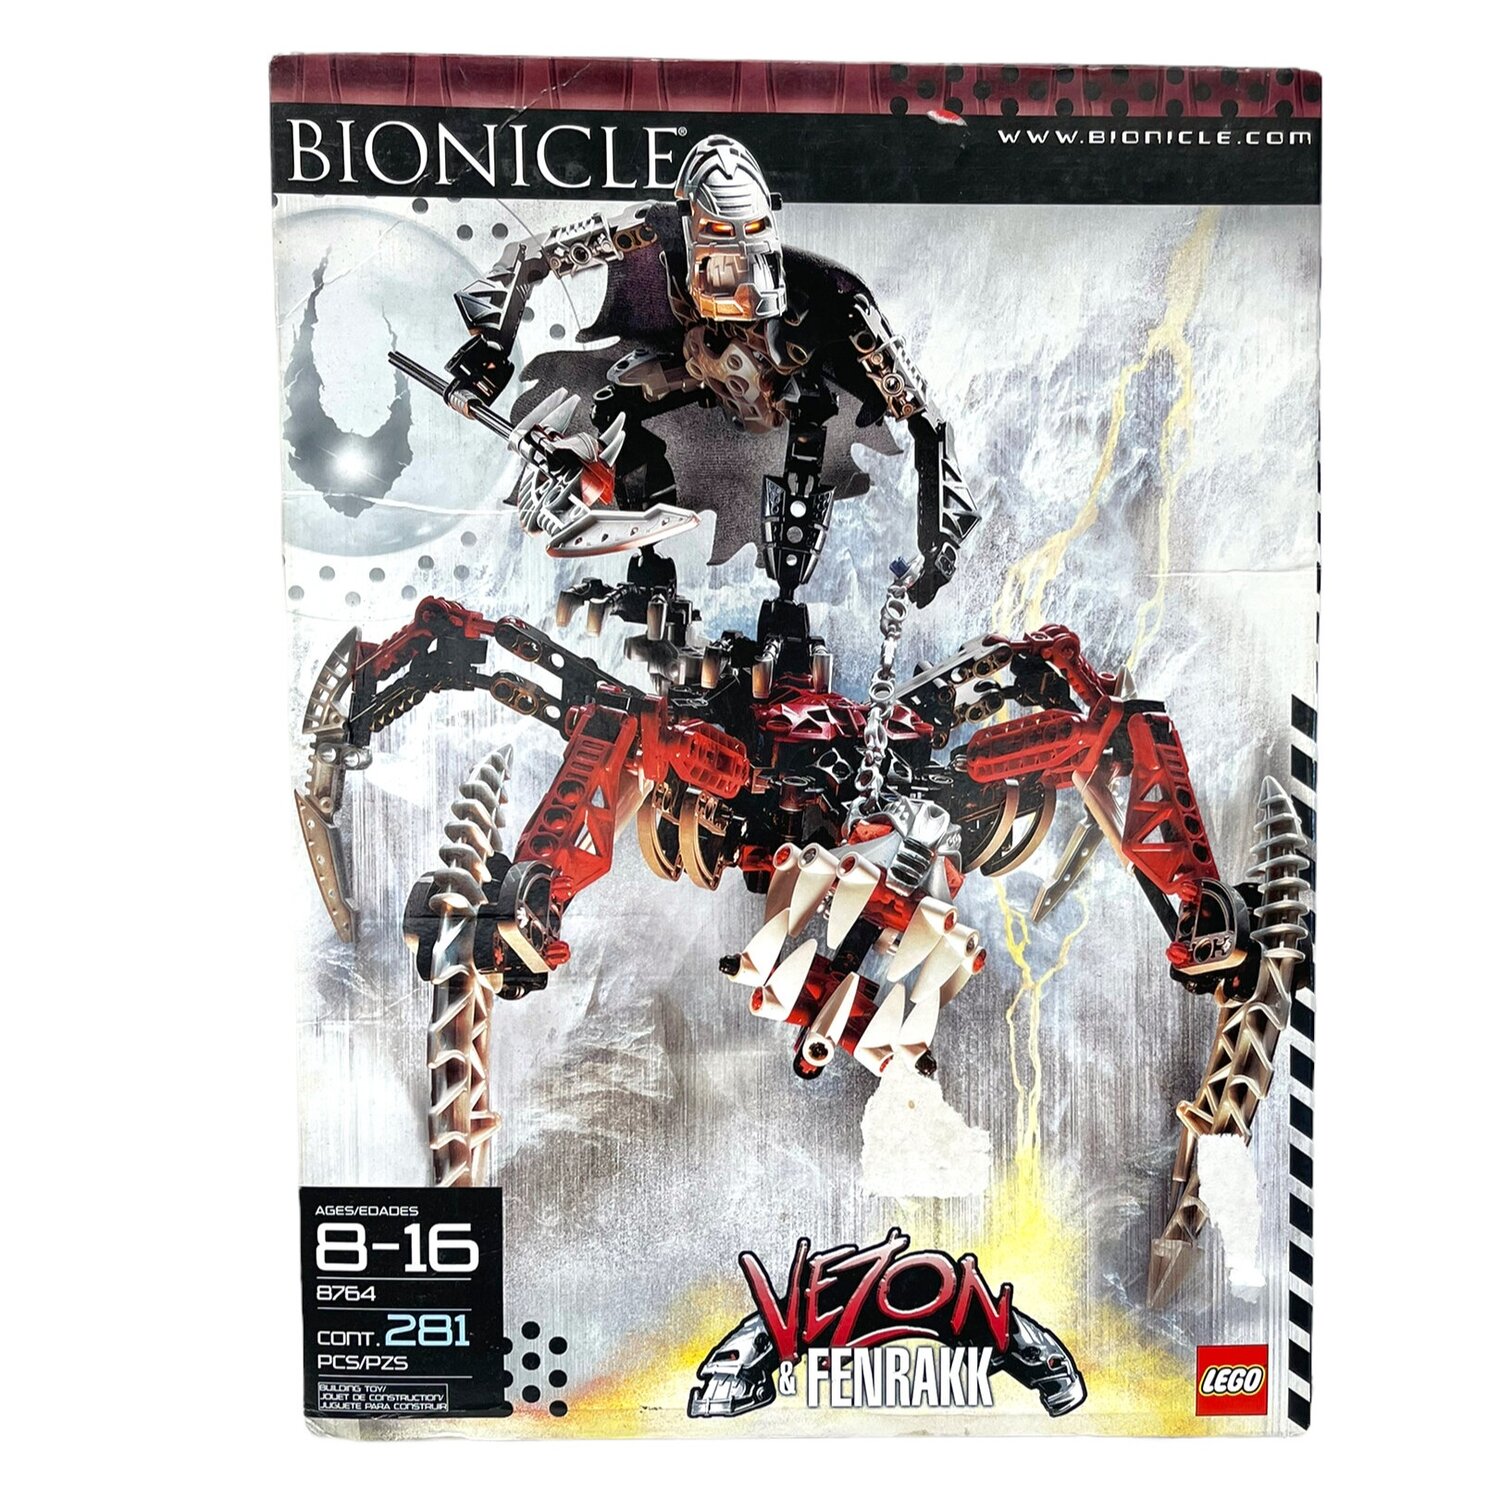 2006 Bionicle 8764, "Vezon and Fenrakk" — Mercer Island Thrift Shop